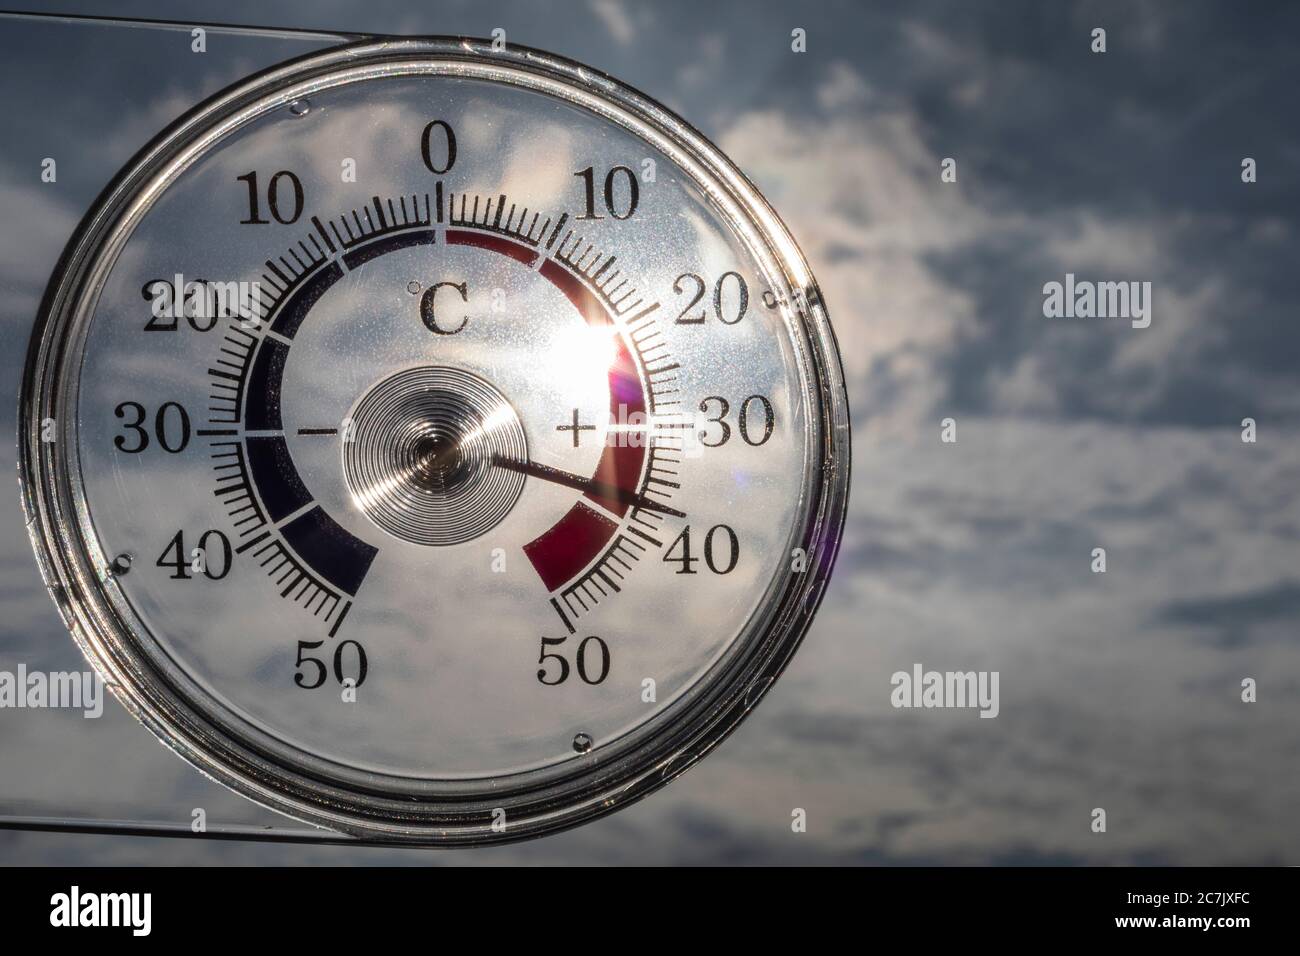 https://c8.alamy.com/comp/2C7JXFC/outdoor-thermometer-37-degrees-celsius-symbol-climate-change-2C7JXFC.jpg